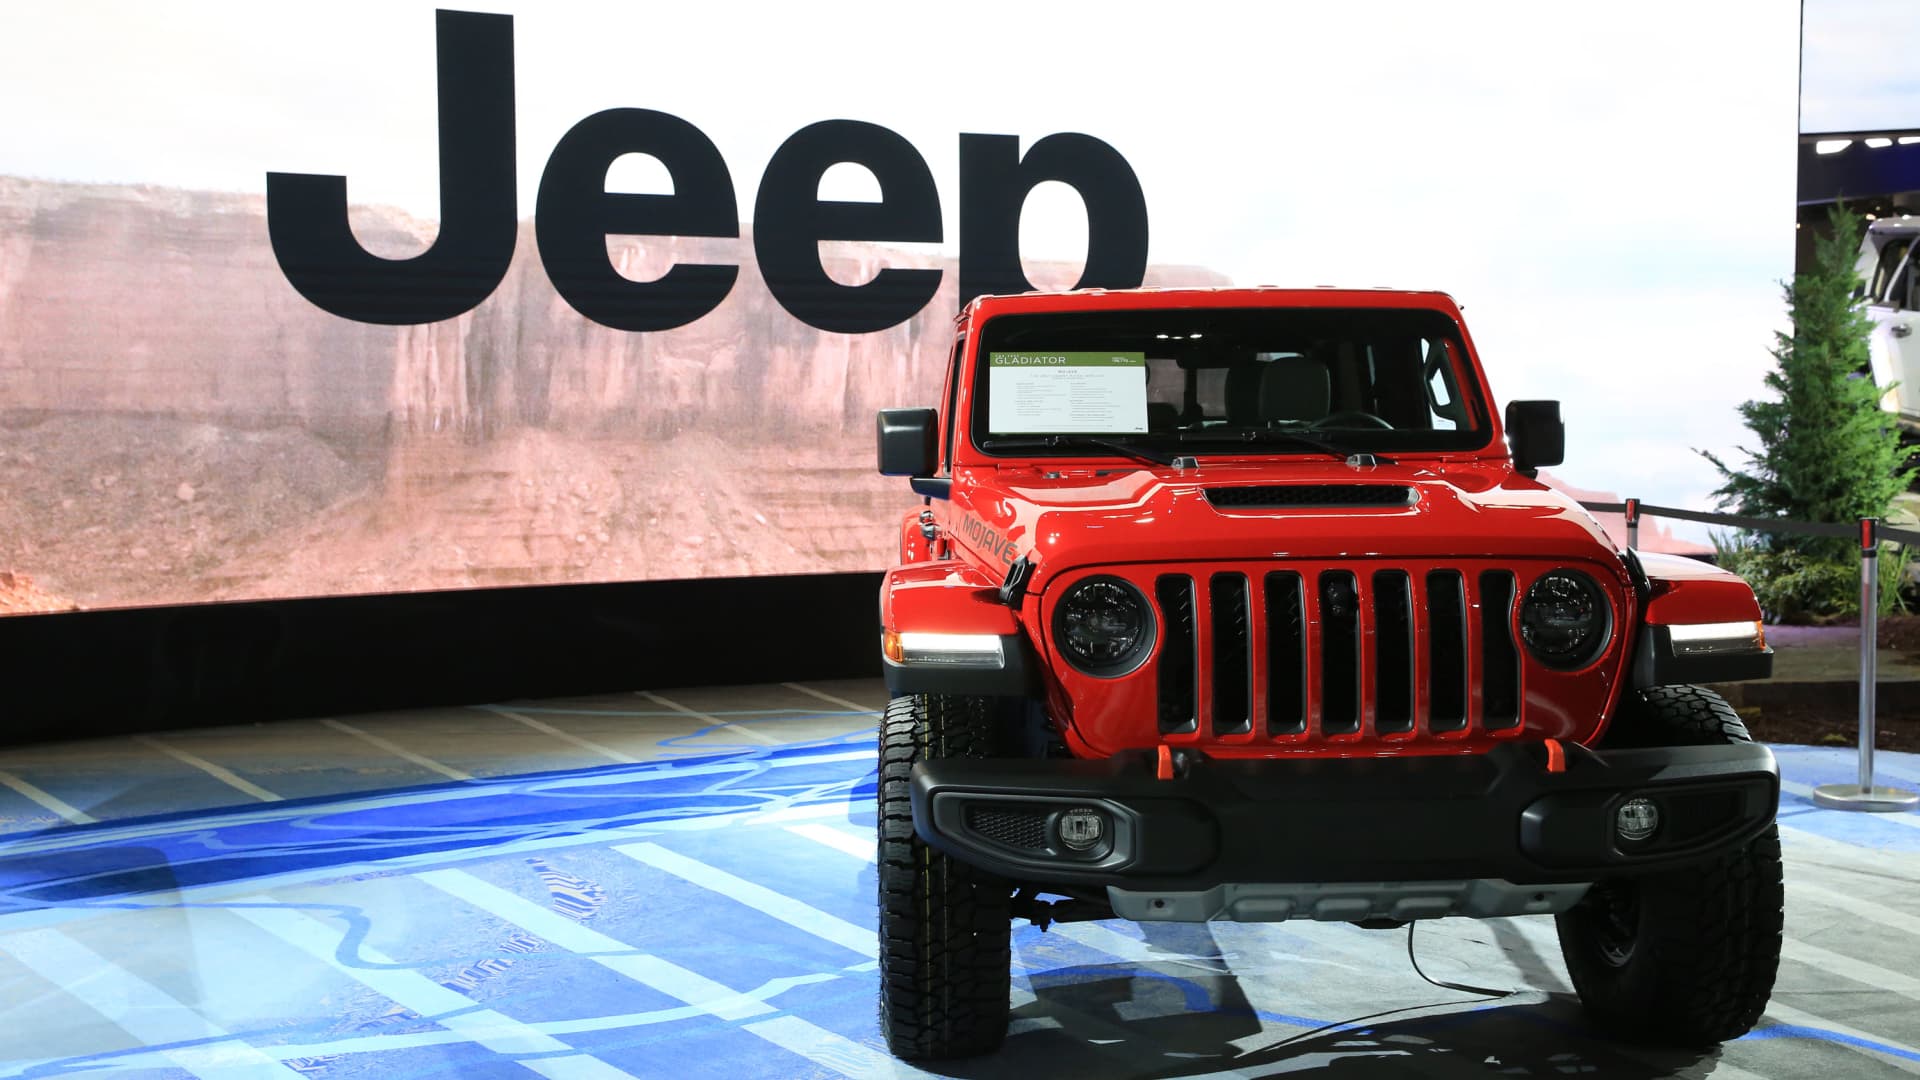 Jeep, Dodge maker Stellantis posts first-half revenue jump, confirms 2023 guidance